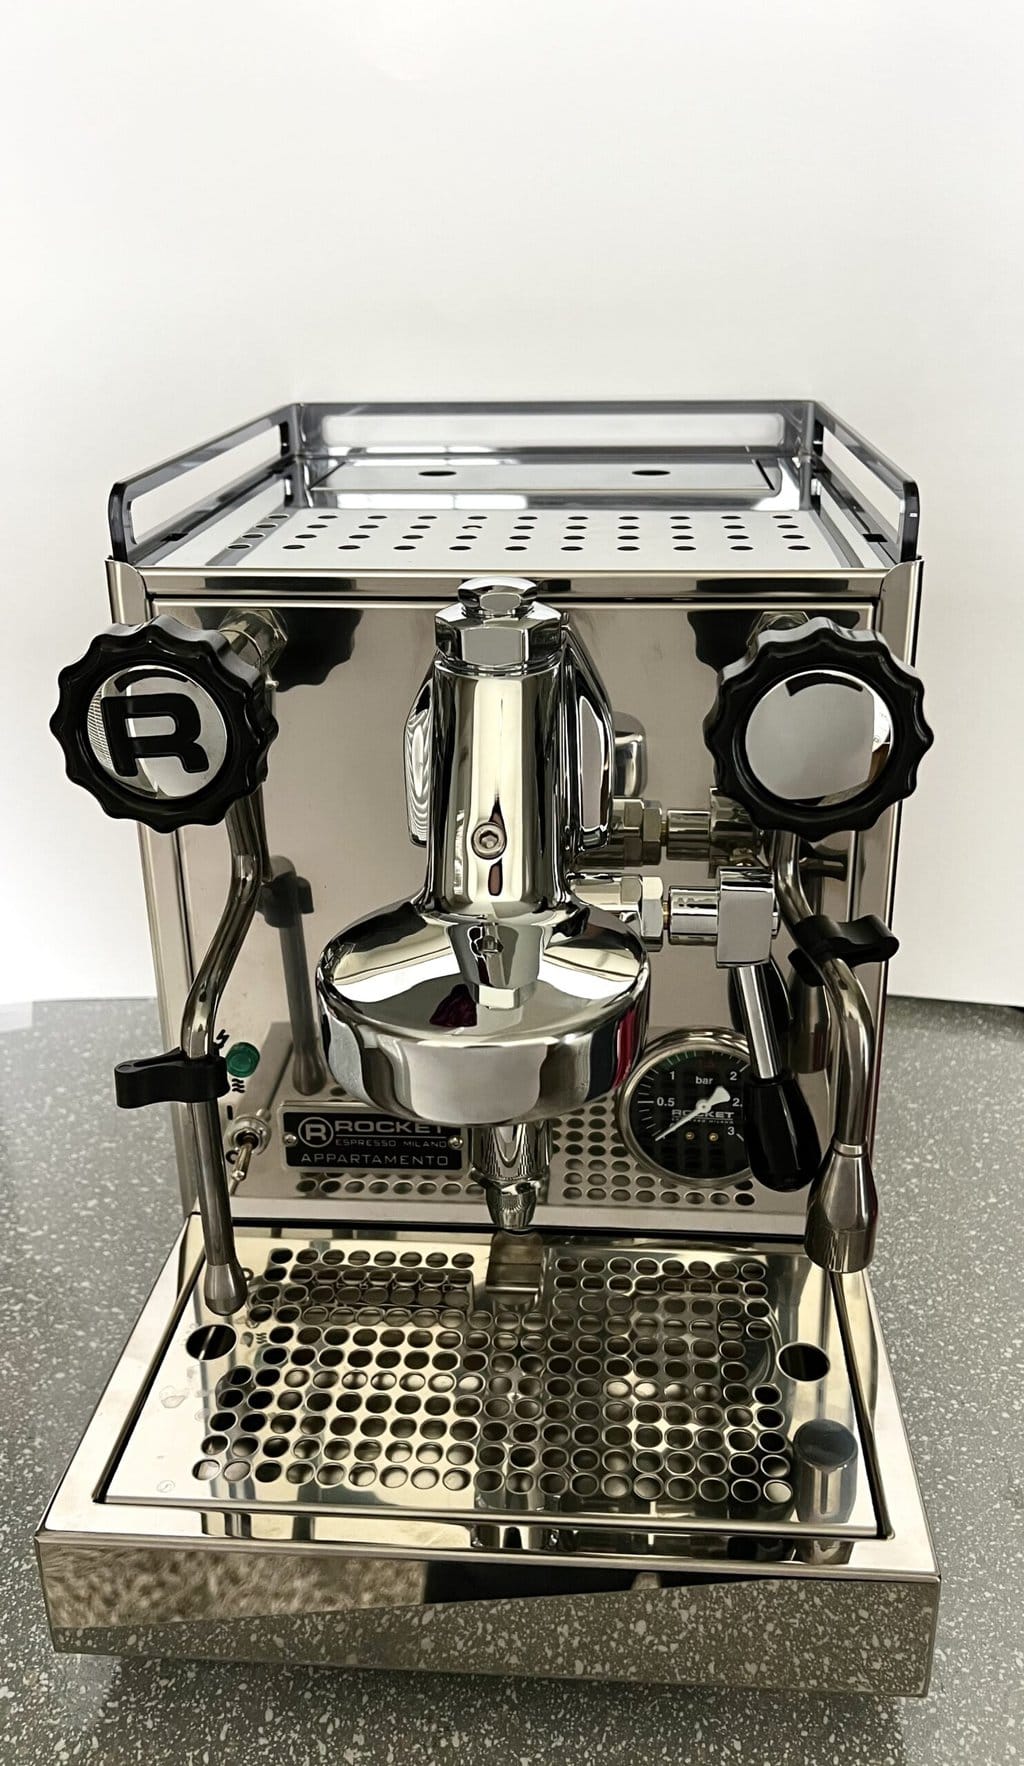 top of the Rocket Espresso Appartamento coffee machine